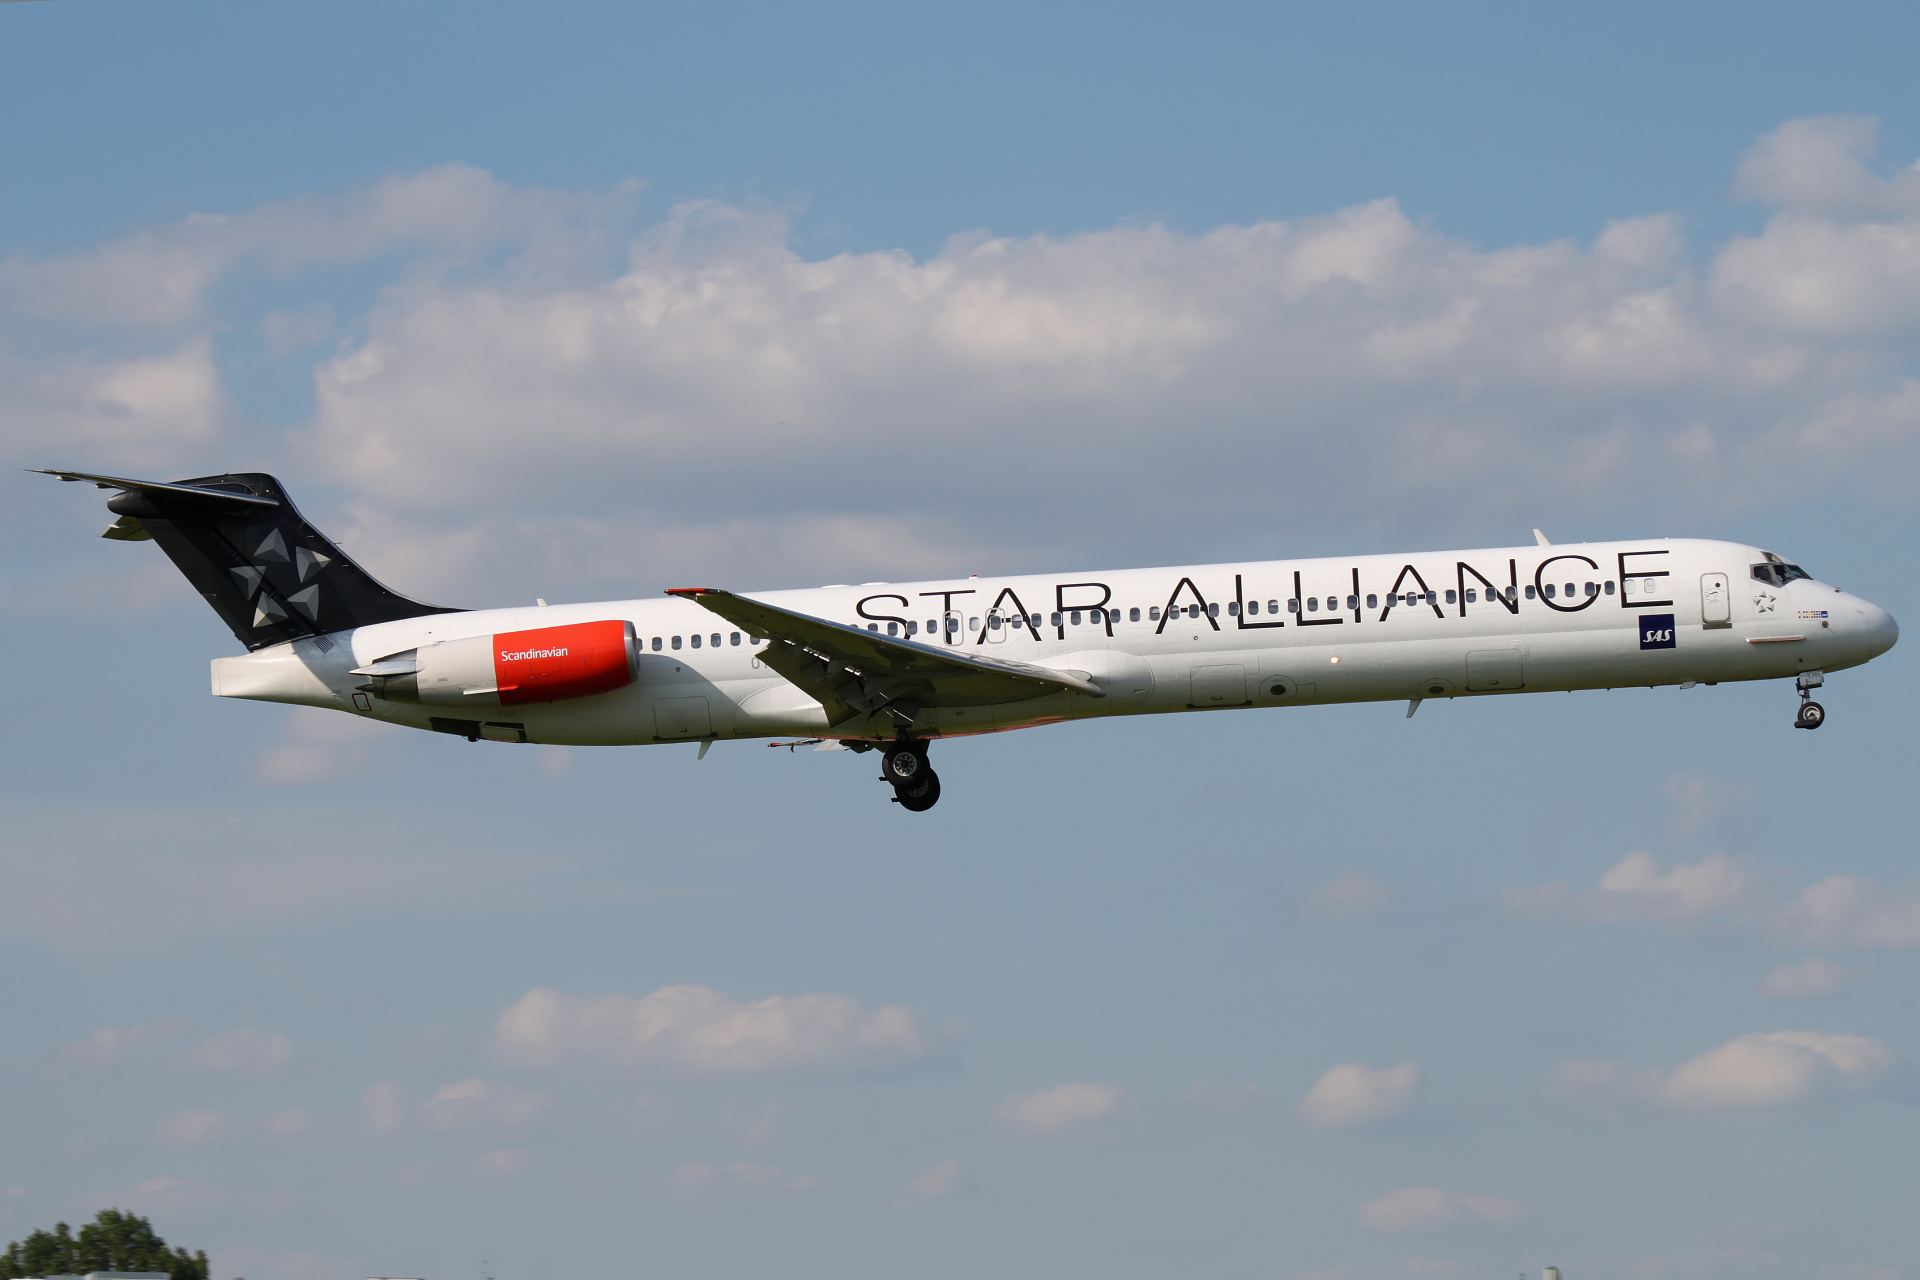 OY-KHE (Star Alliance livery) (Aircraft » EPWA Spotting » McDonnell Douglas MD-82 » SAS Scandinavian Airlines)